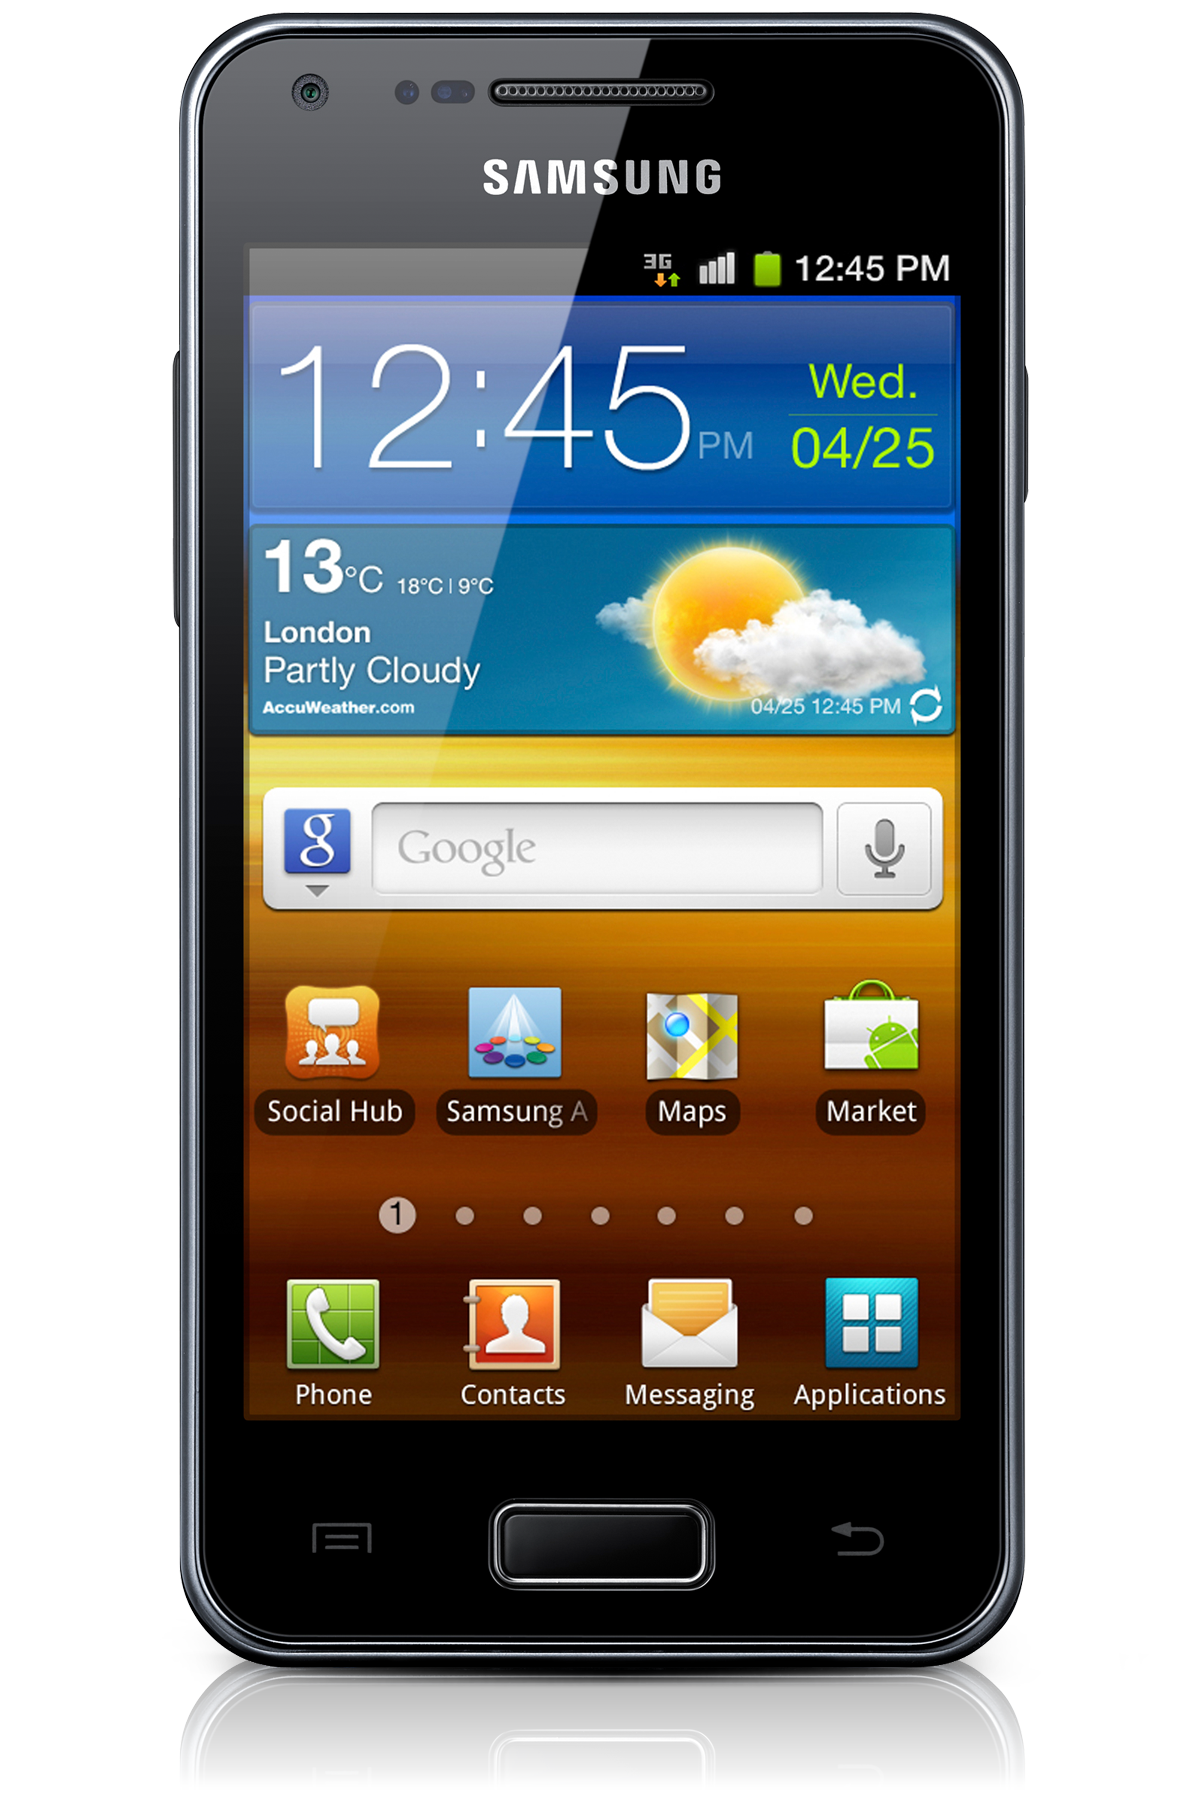 Galaxy S Advance
i9070 Android